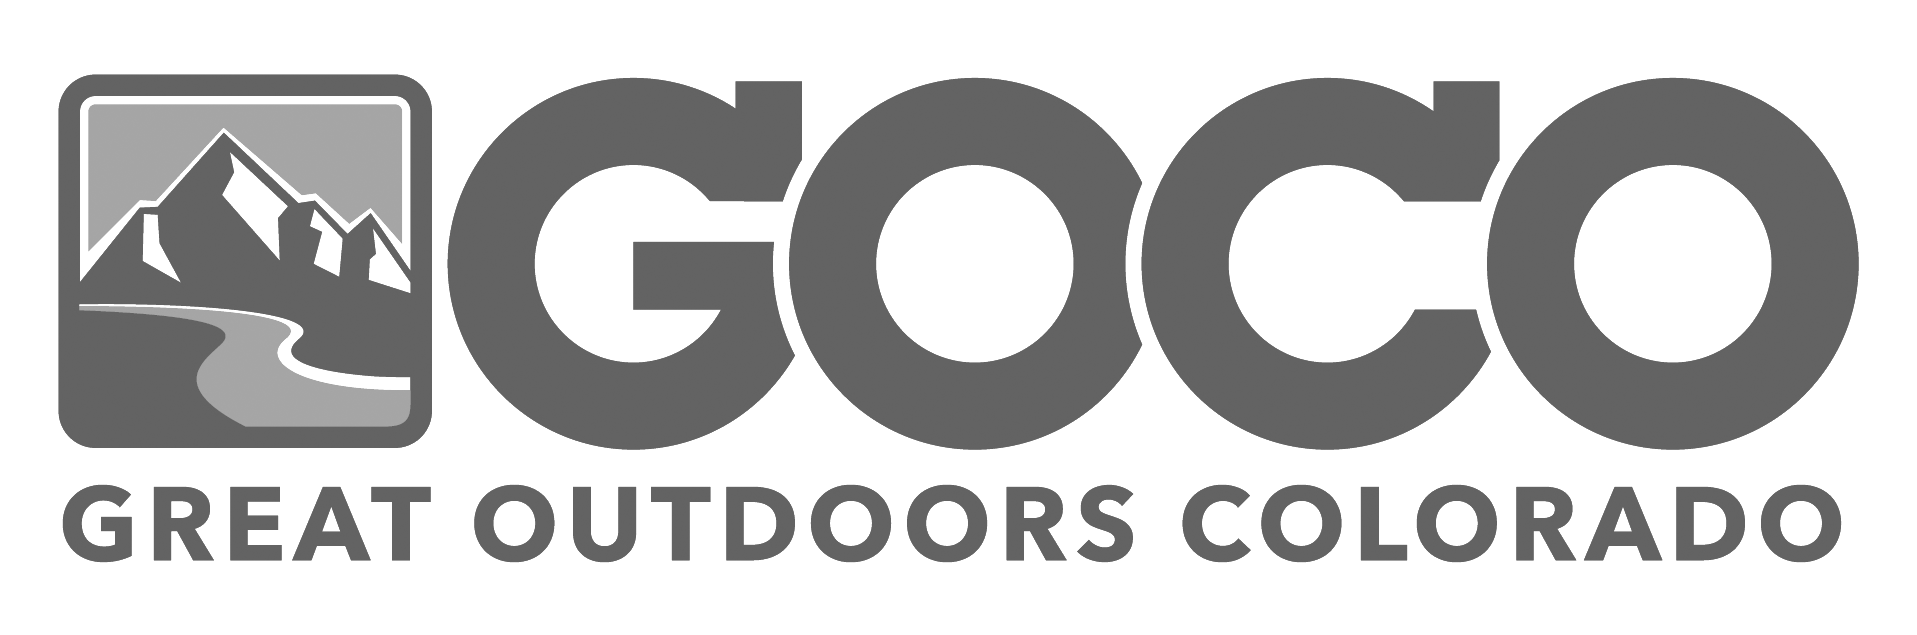 GOCO-logo.png